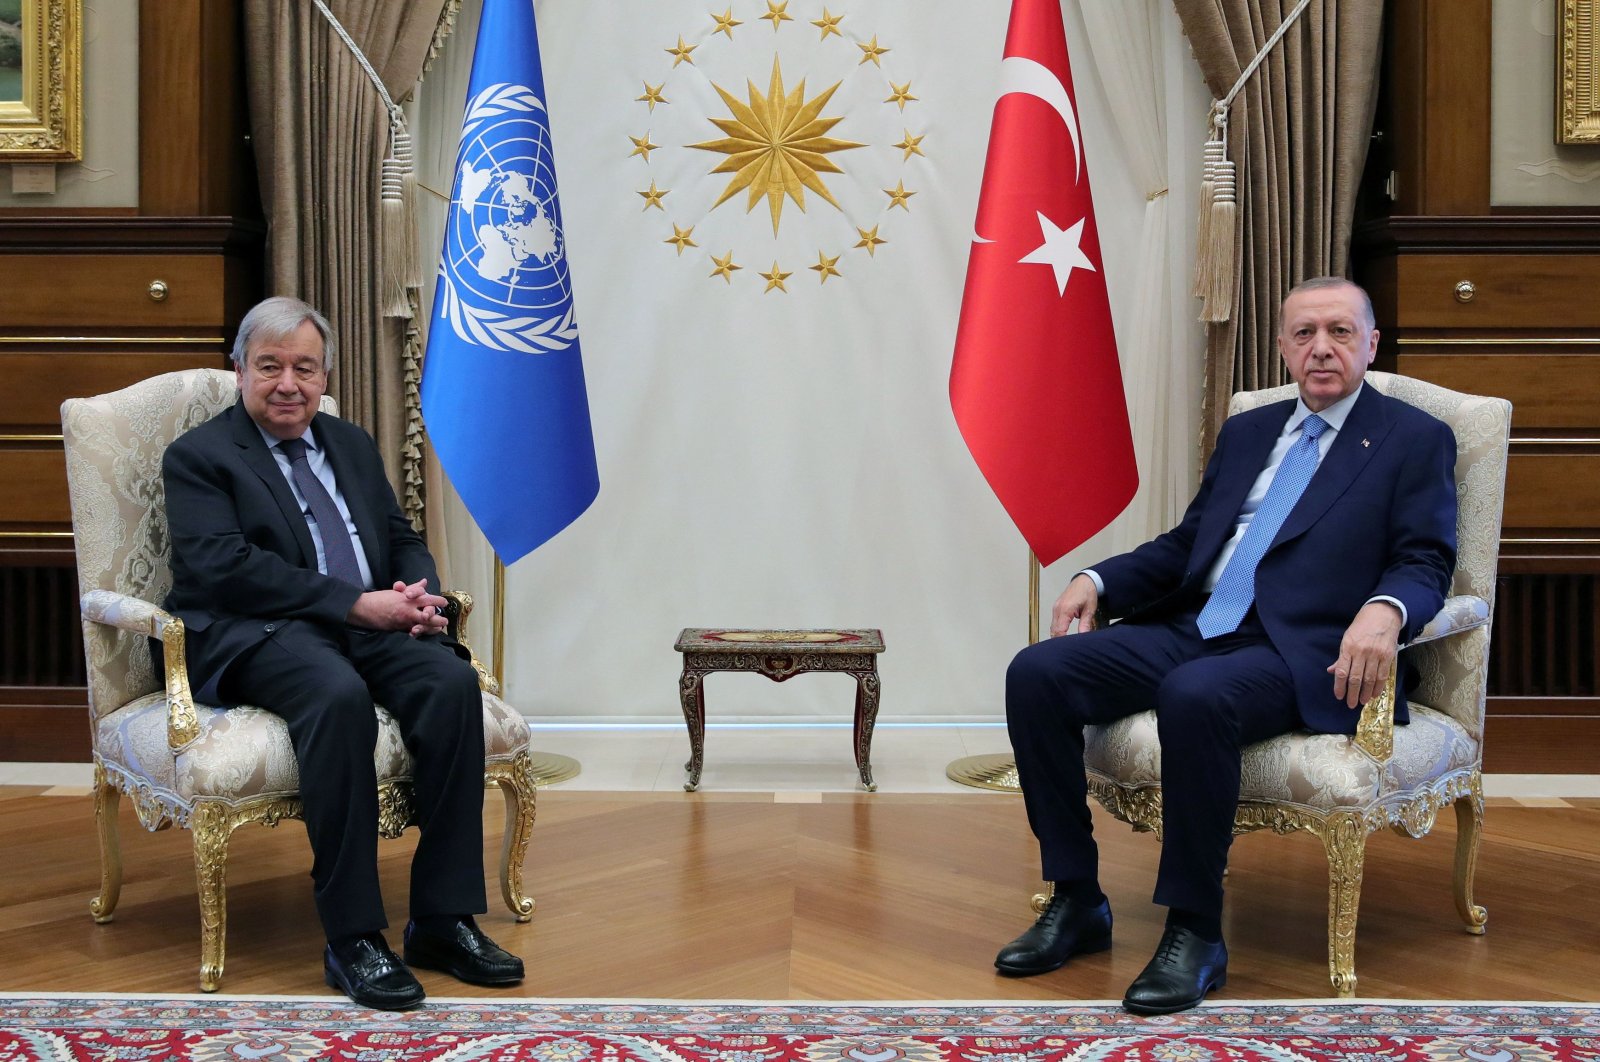 President Recep Tayyip Erdoğan meets with the U.N. Secretary-General Antonio Guterres in Ankara, Turkey, April 25, 2022. (Reuters Photo)